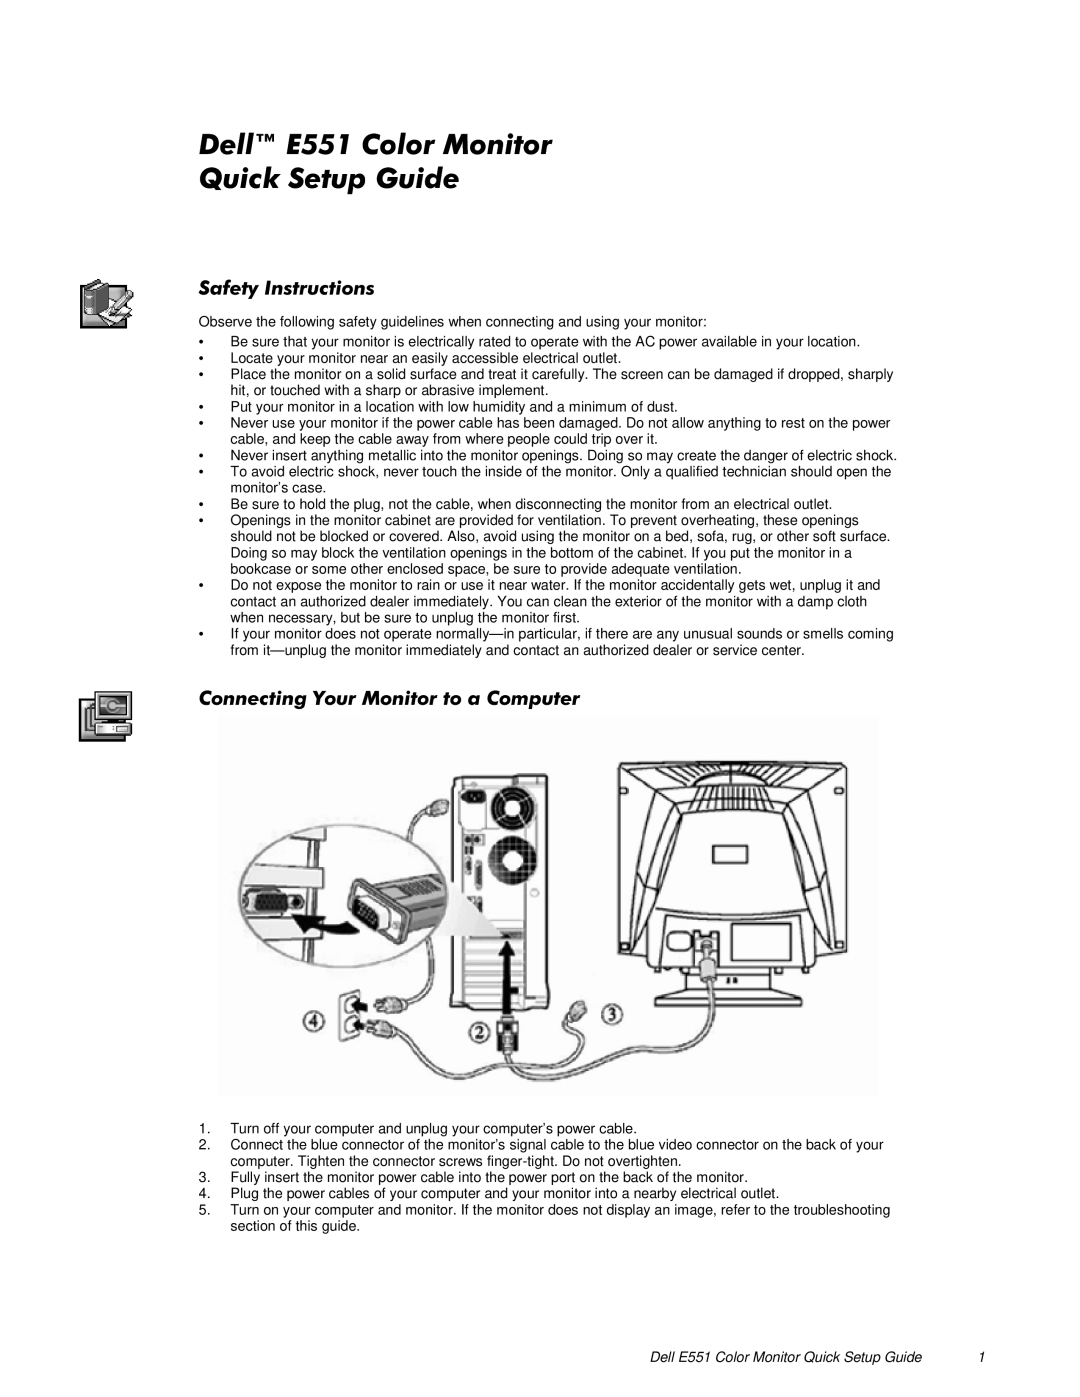 Dell setup guide Dell E551 Color Monitor Quick Setup Guide, 6DIHW\4XLFN6HWXSHOOå,QVWUXFWLRQV&RORU*XLGH0RQLWRU 